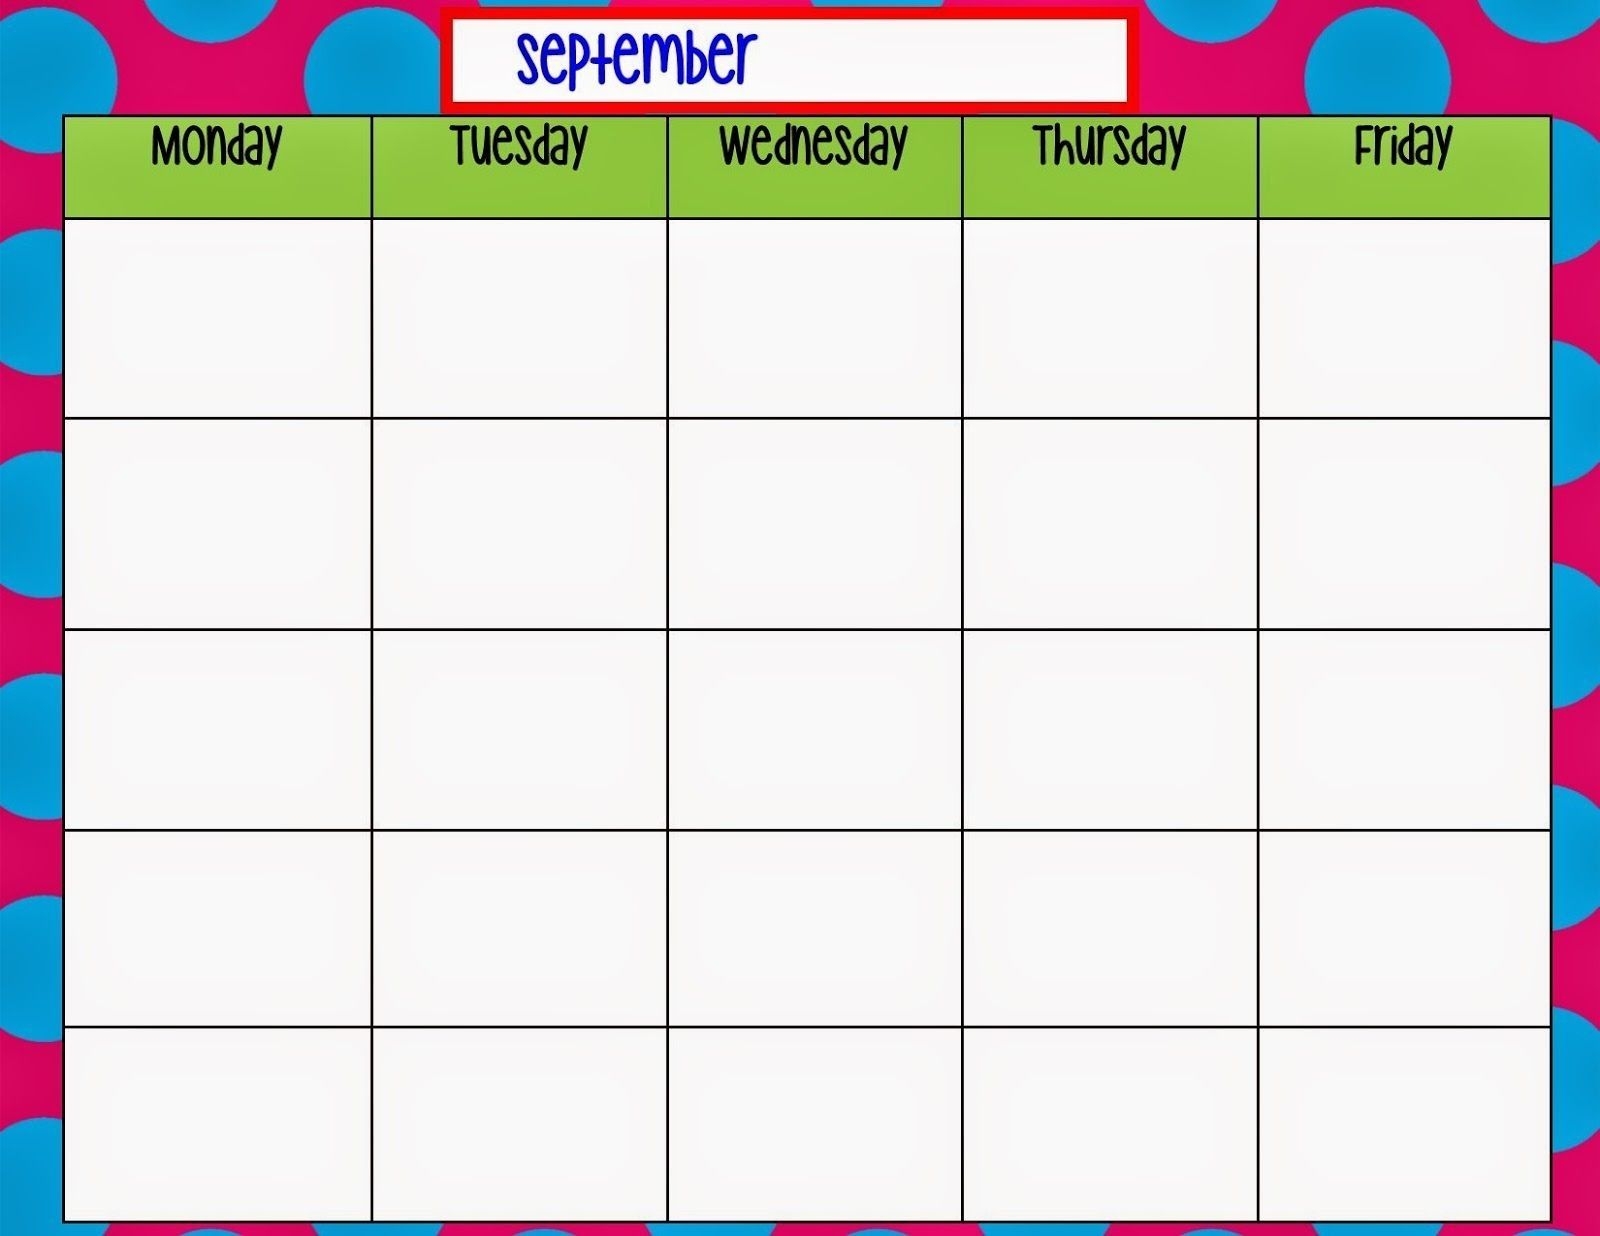 monday through friday planning template | calendar